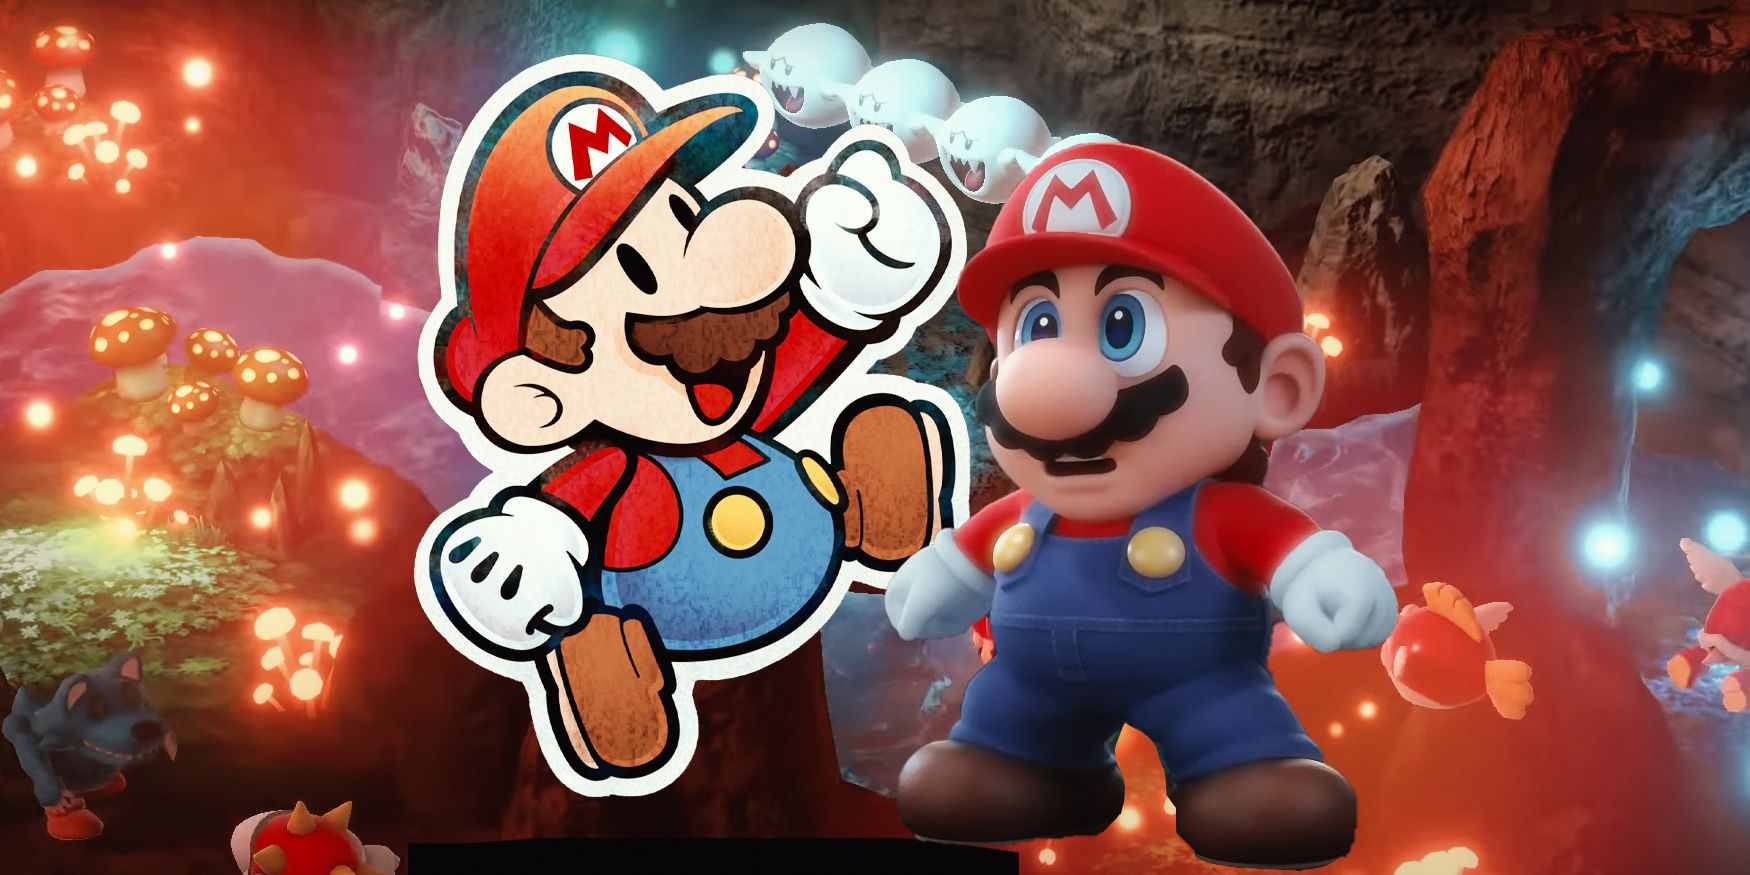 Mario RPG remake developer revealed, as spoilers circulate